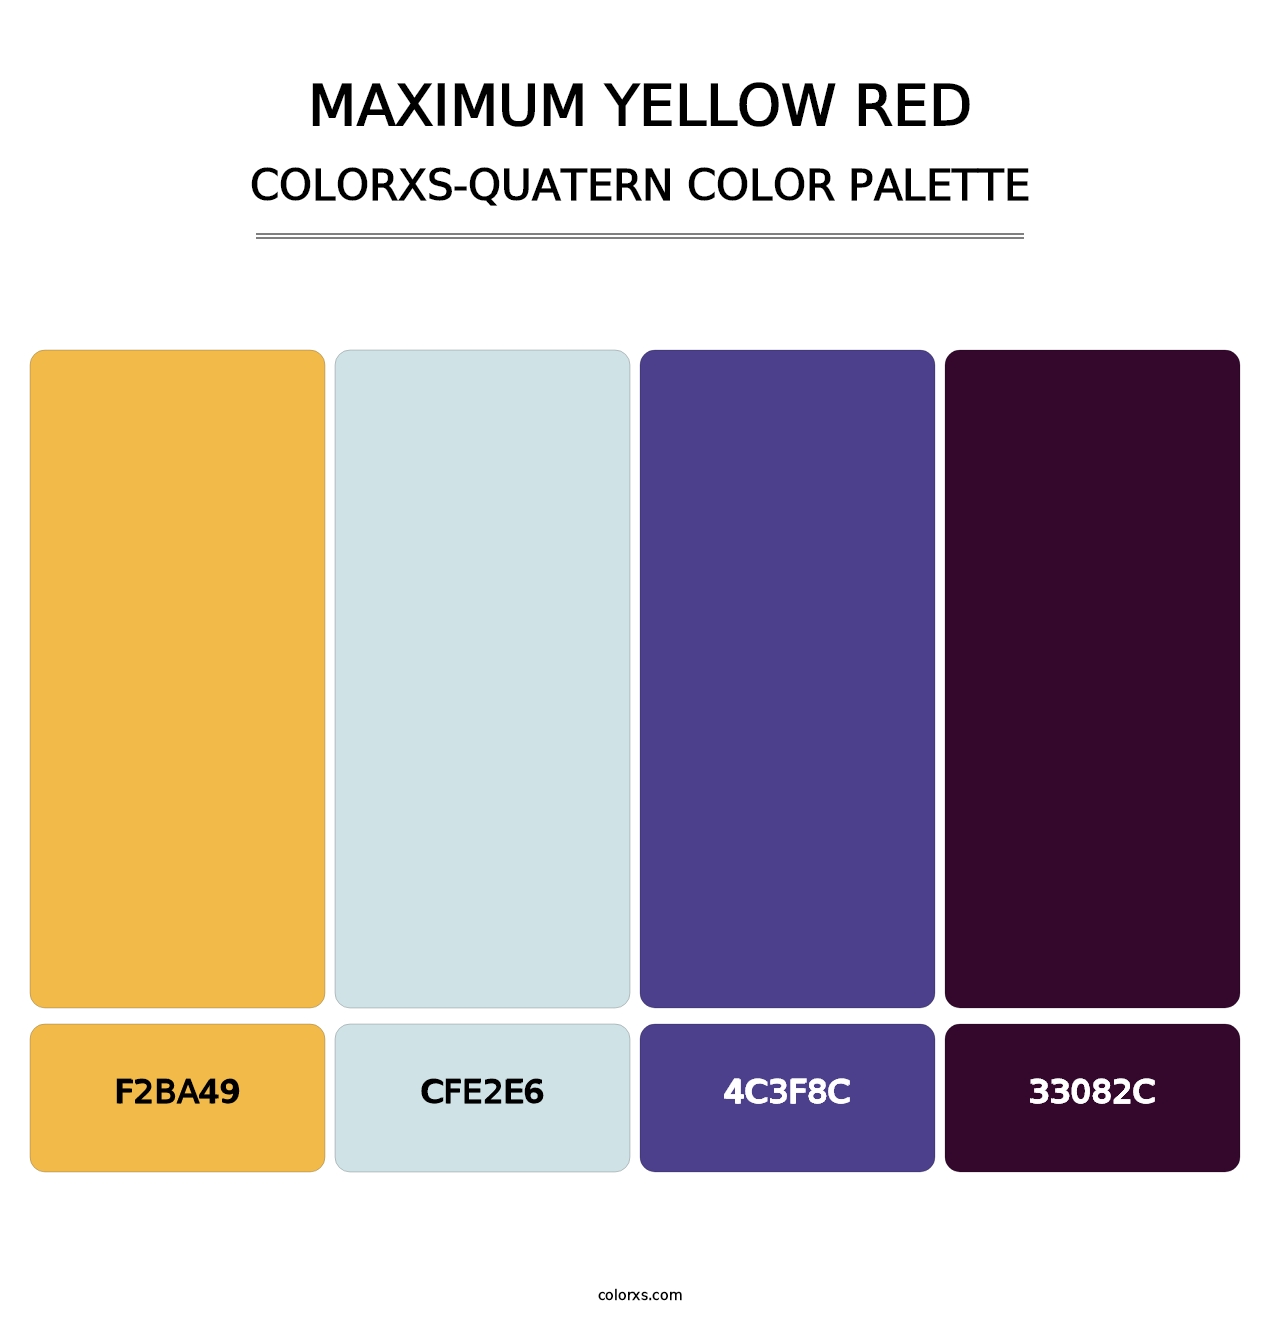 Maximum Yellow Red - Colorxs Quatern Palette